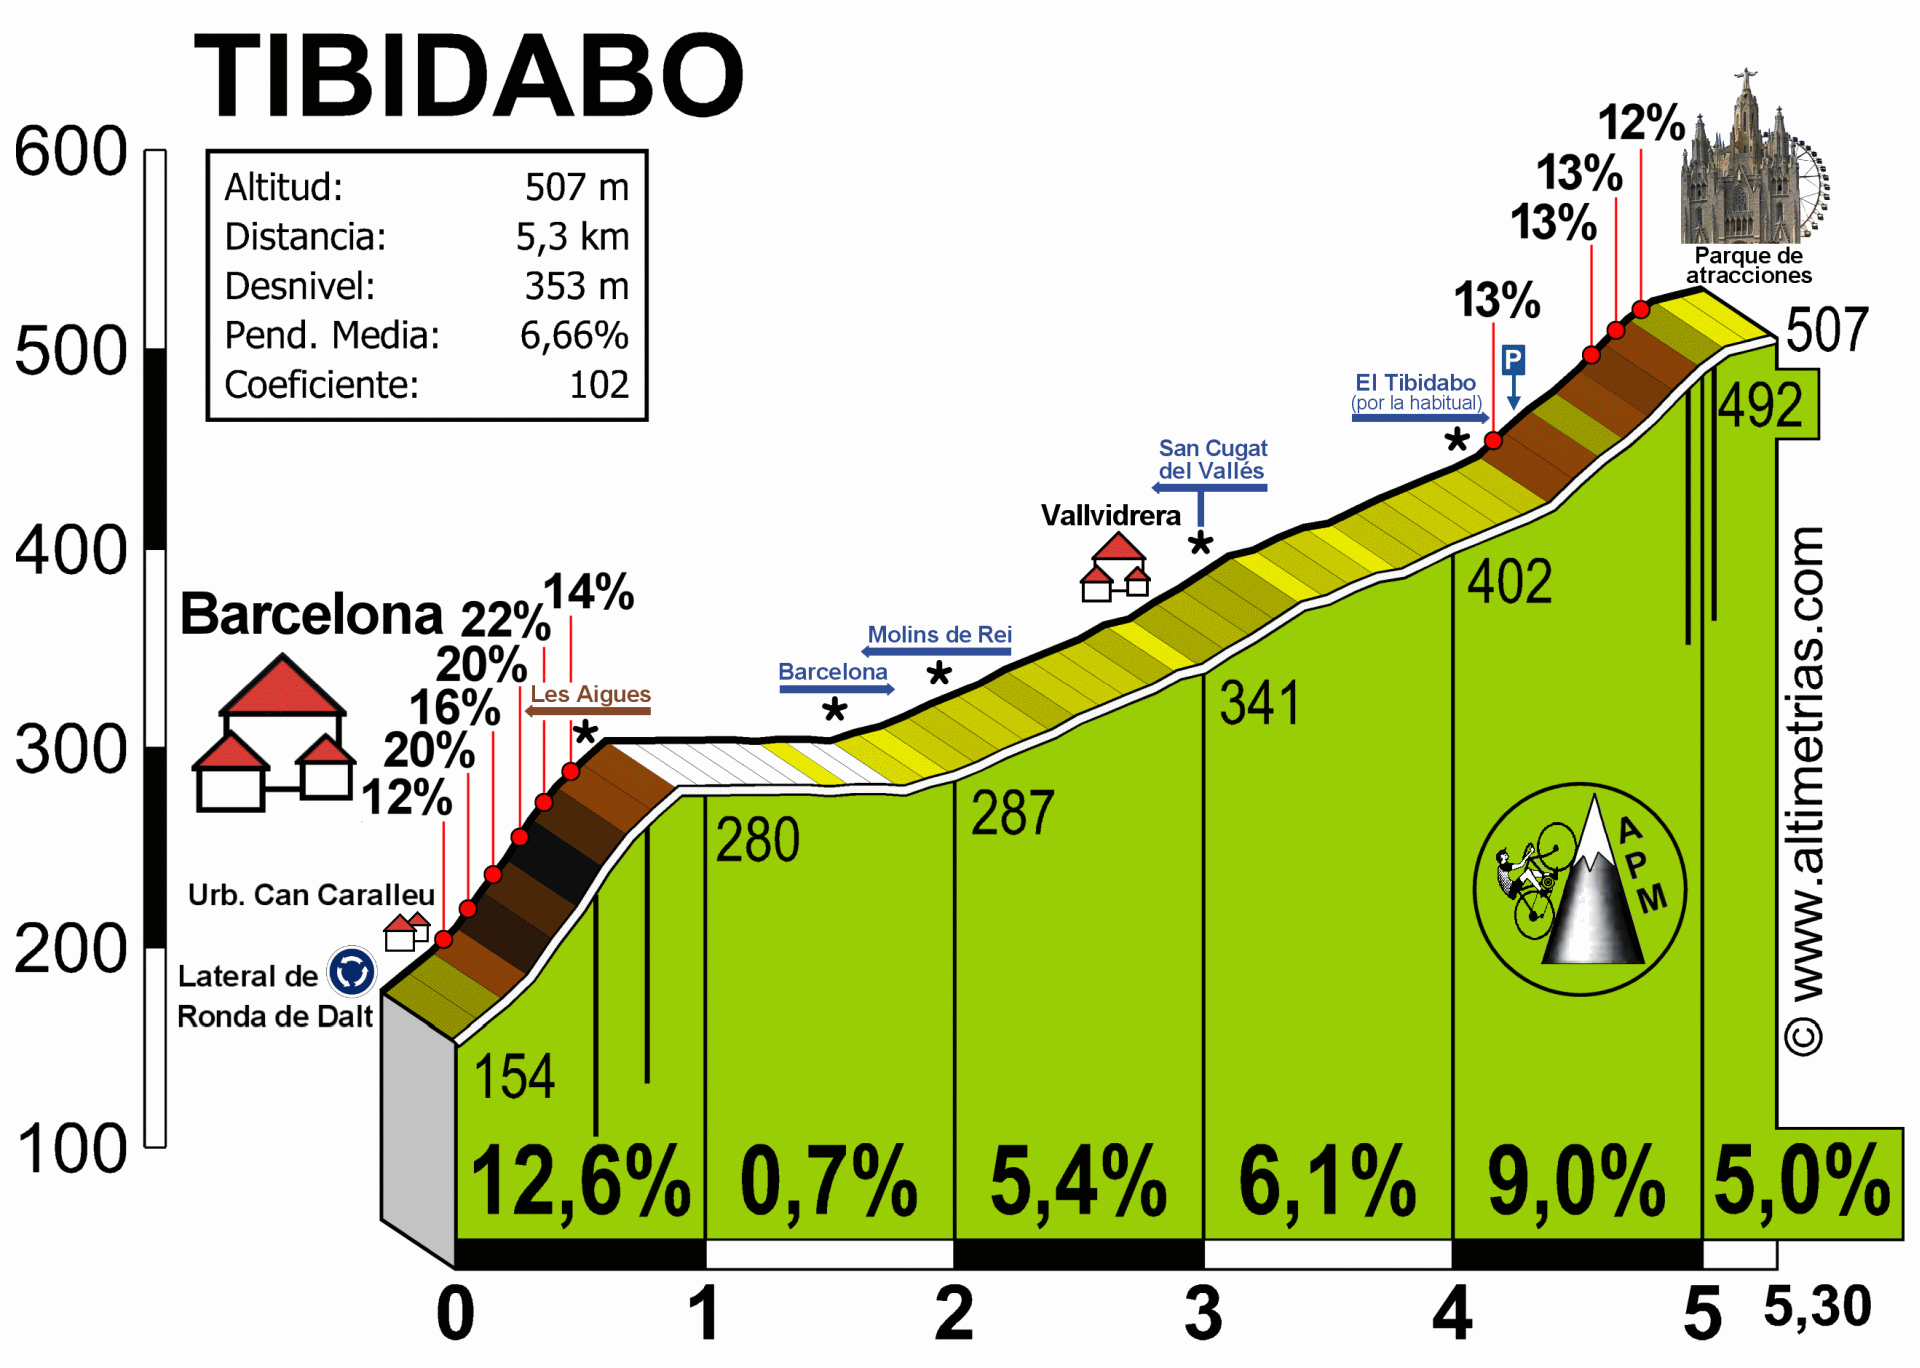 Tibidabo, El